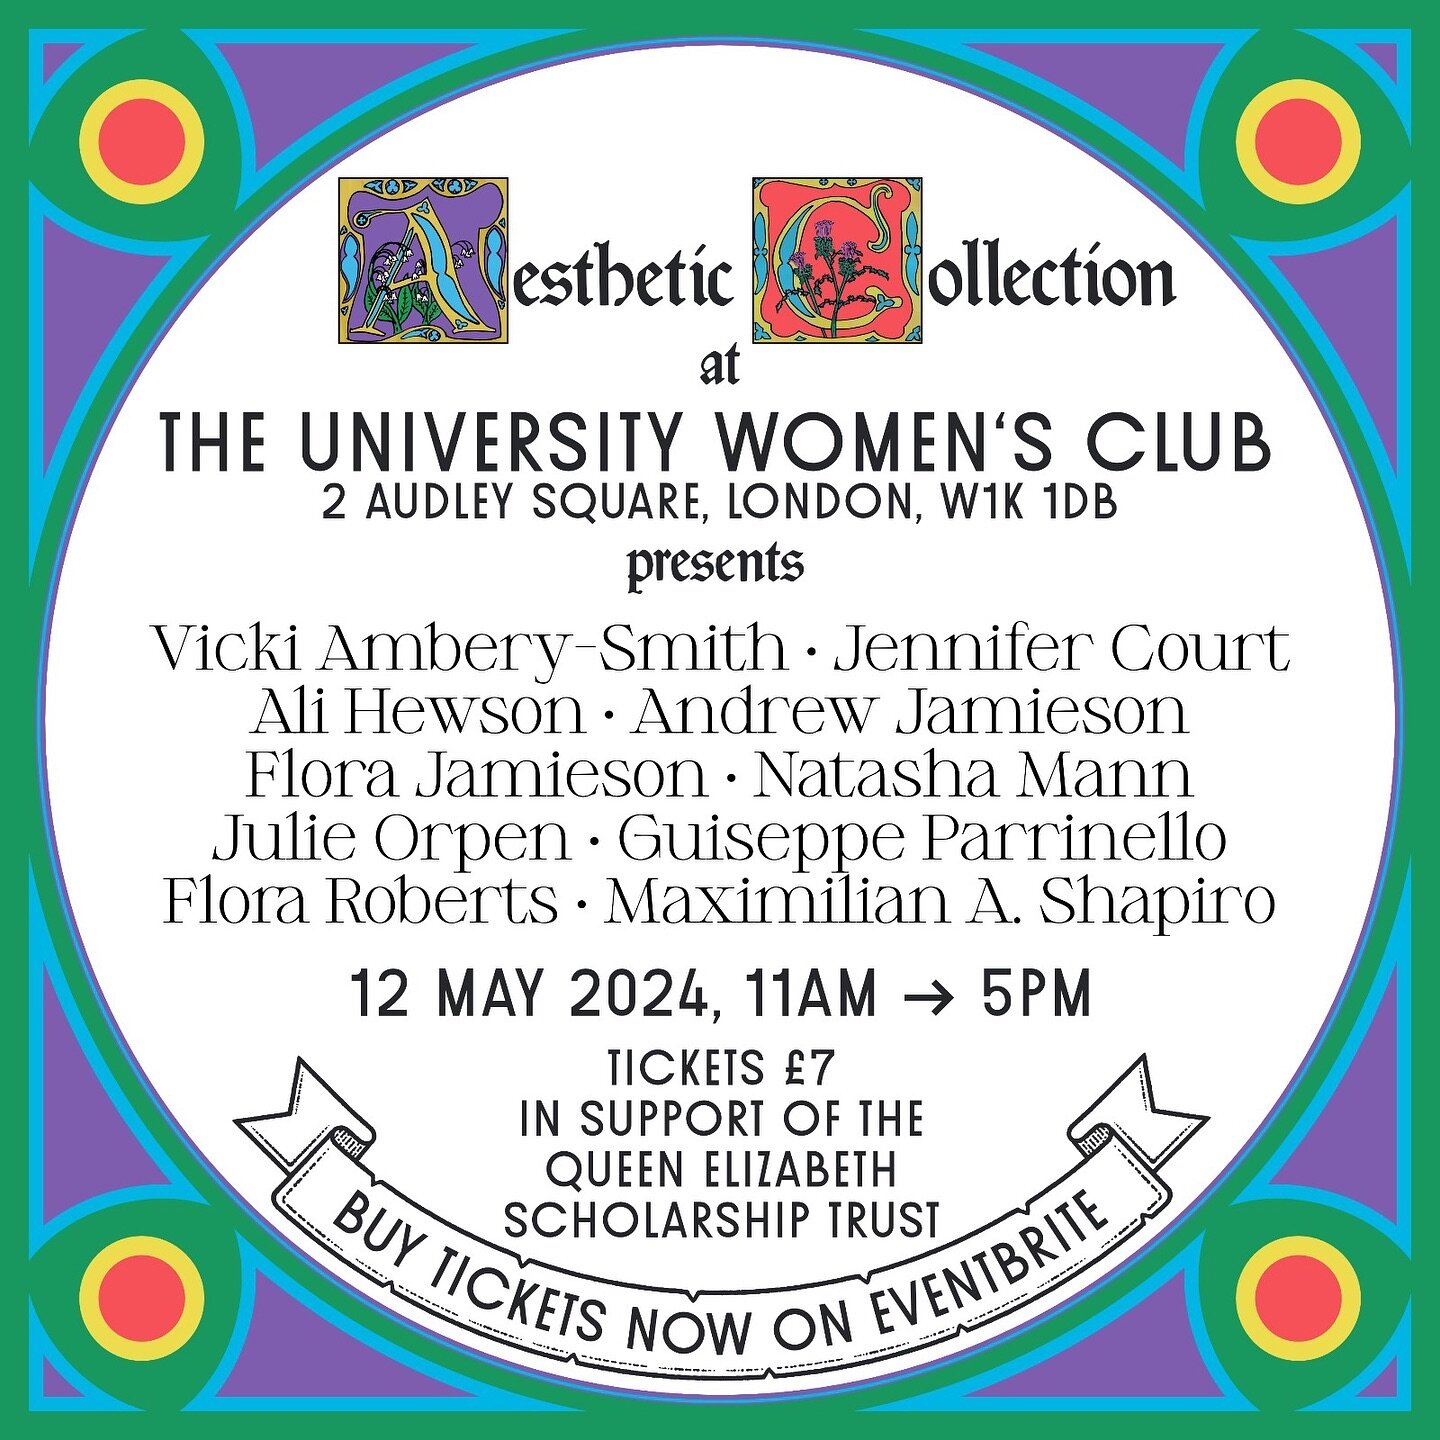 I am pleased to announce the Aesthetic Collection Art Fair at @universitywomensclub in support of @qestcraft on 12th May! 

With talented artists @vickiamberysmith @jennifercourt_art @ali.hewson @artyjamie1746 @theroundwindow @natashamann.art @orpenj